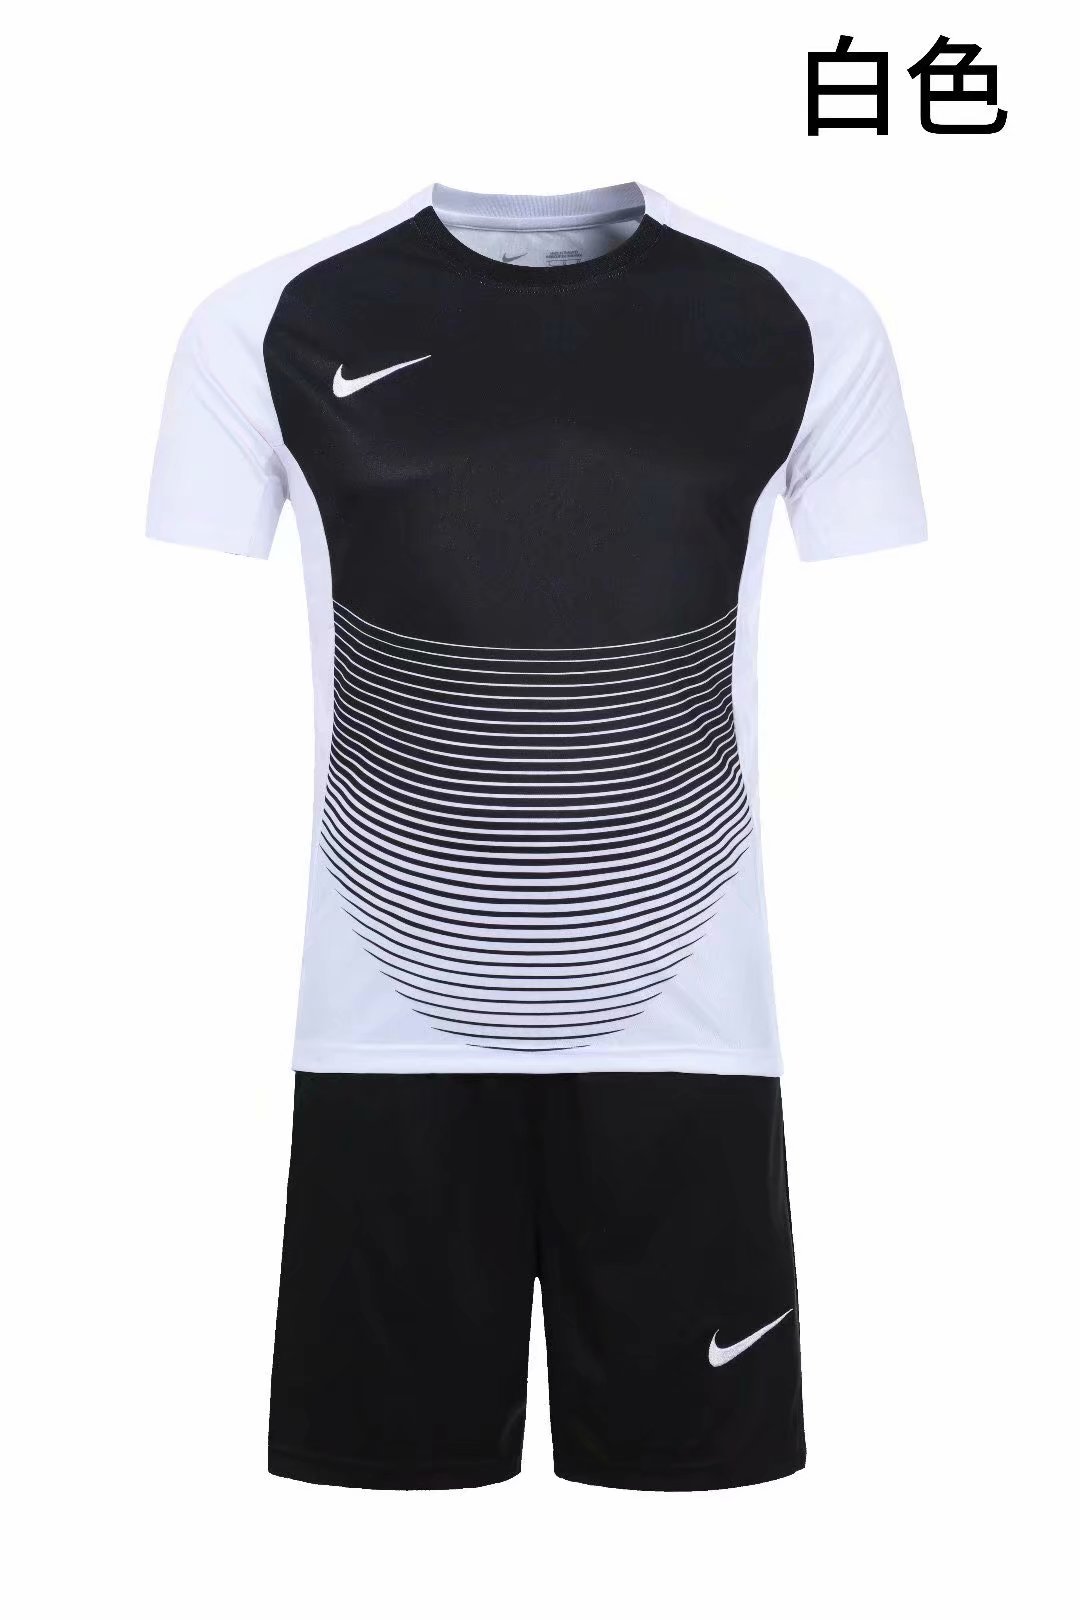 Nike Team Uniforms 002